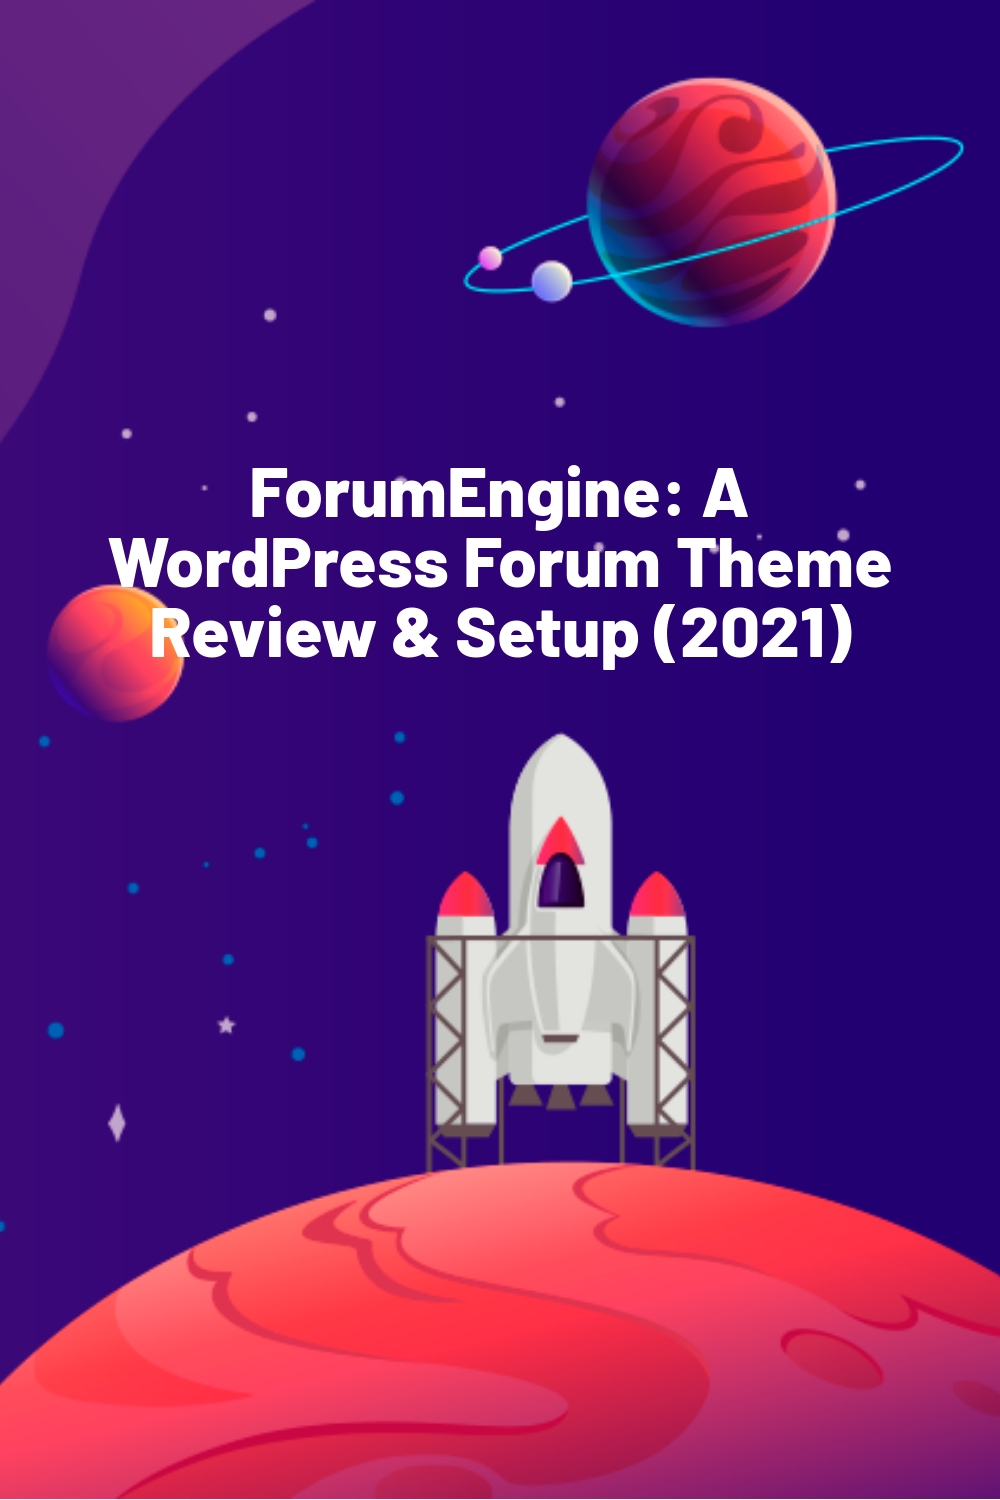 ForumEngine: A WordPress Forum Theme Review & Setup (2021)